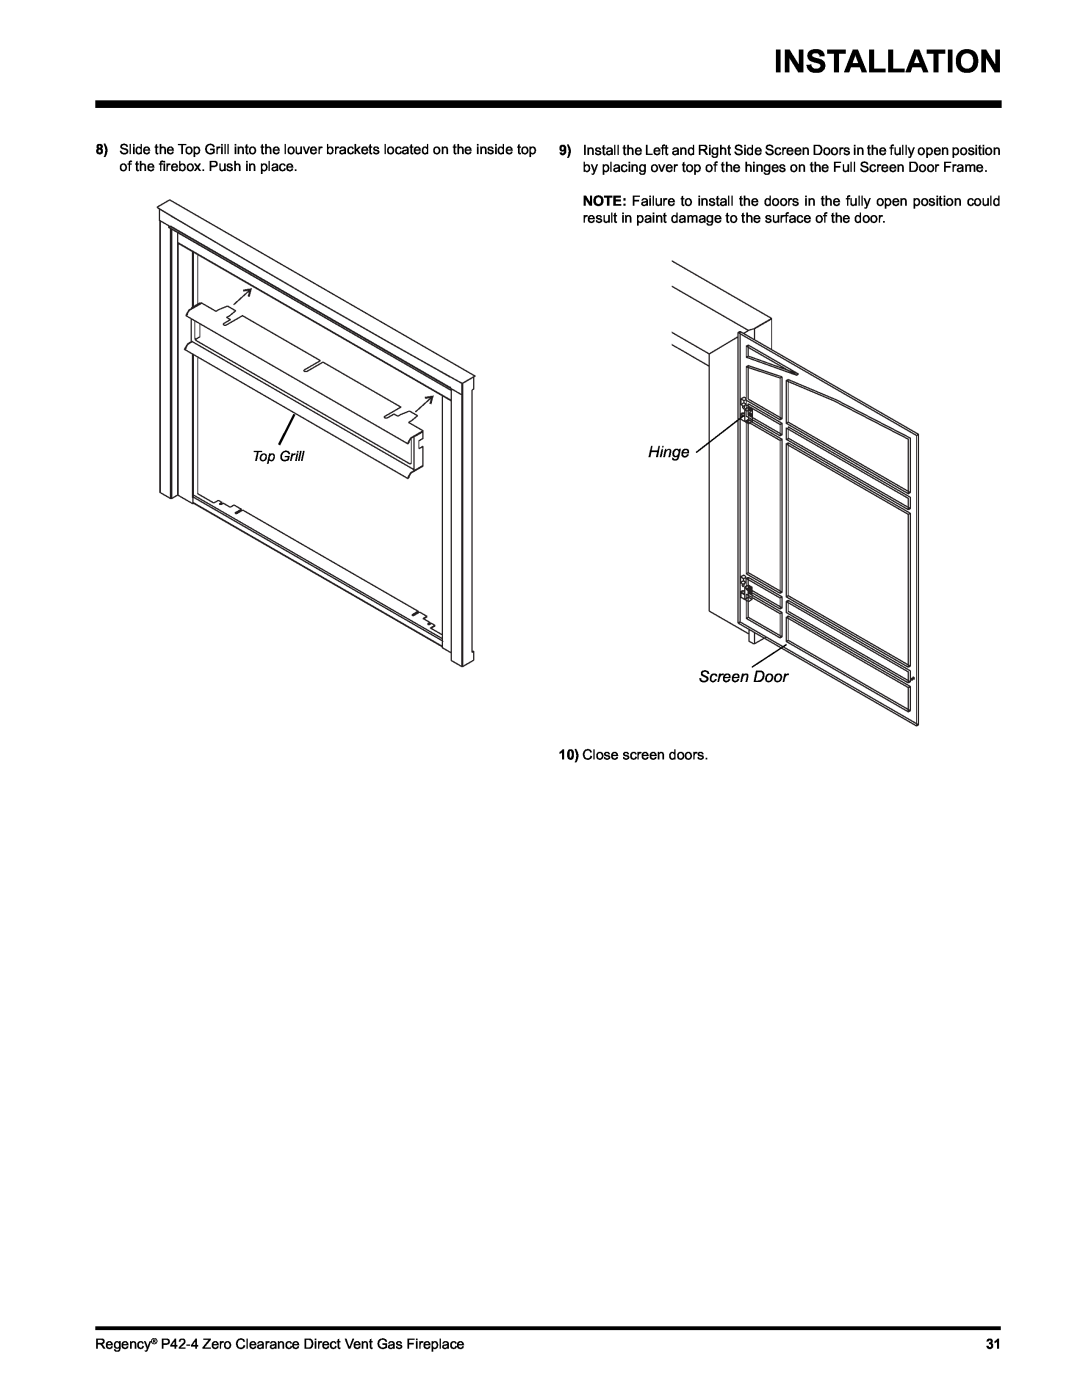 Regency P42-LP4, P42-NG4 installation manual Hinge, Screen Door, Top Grill 